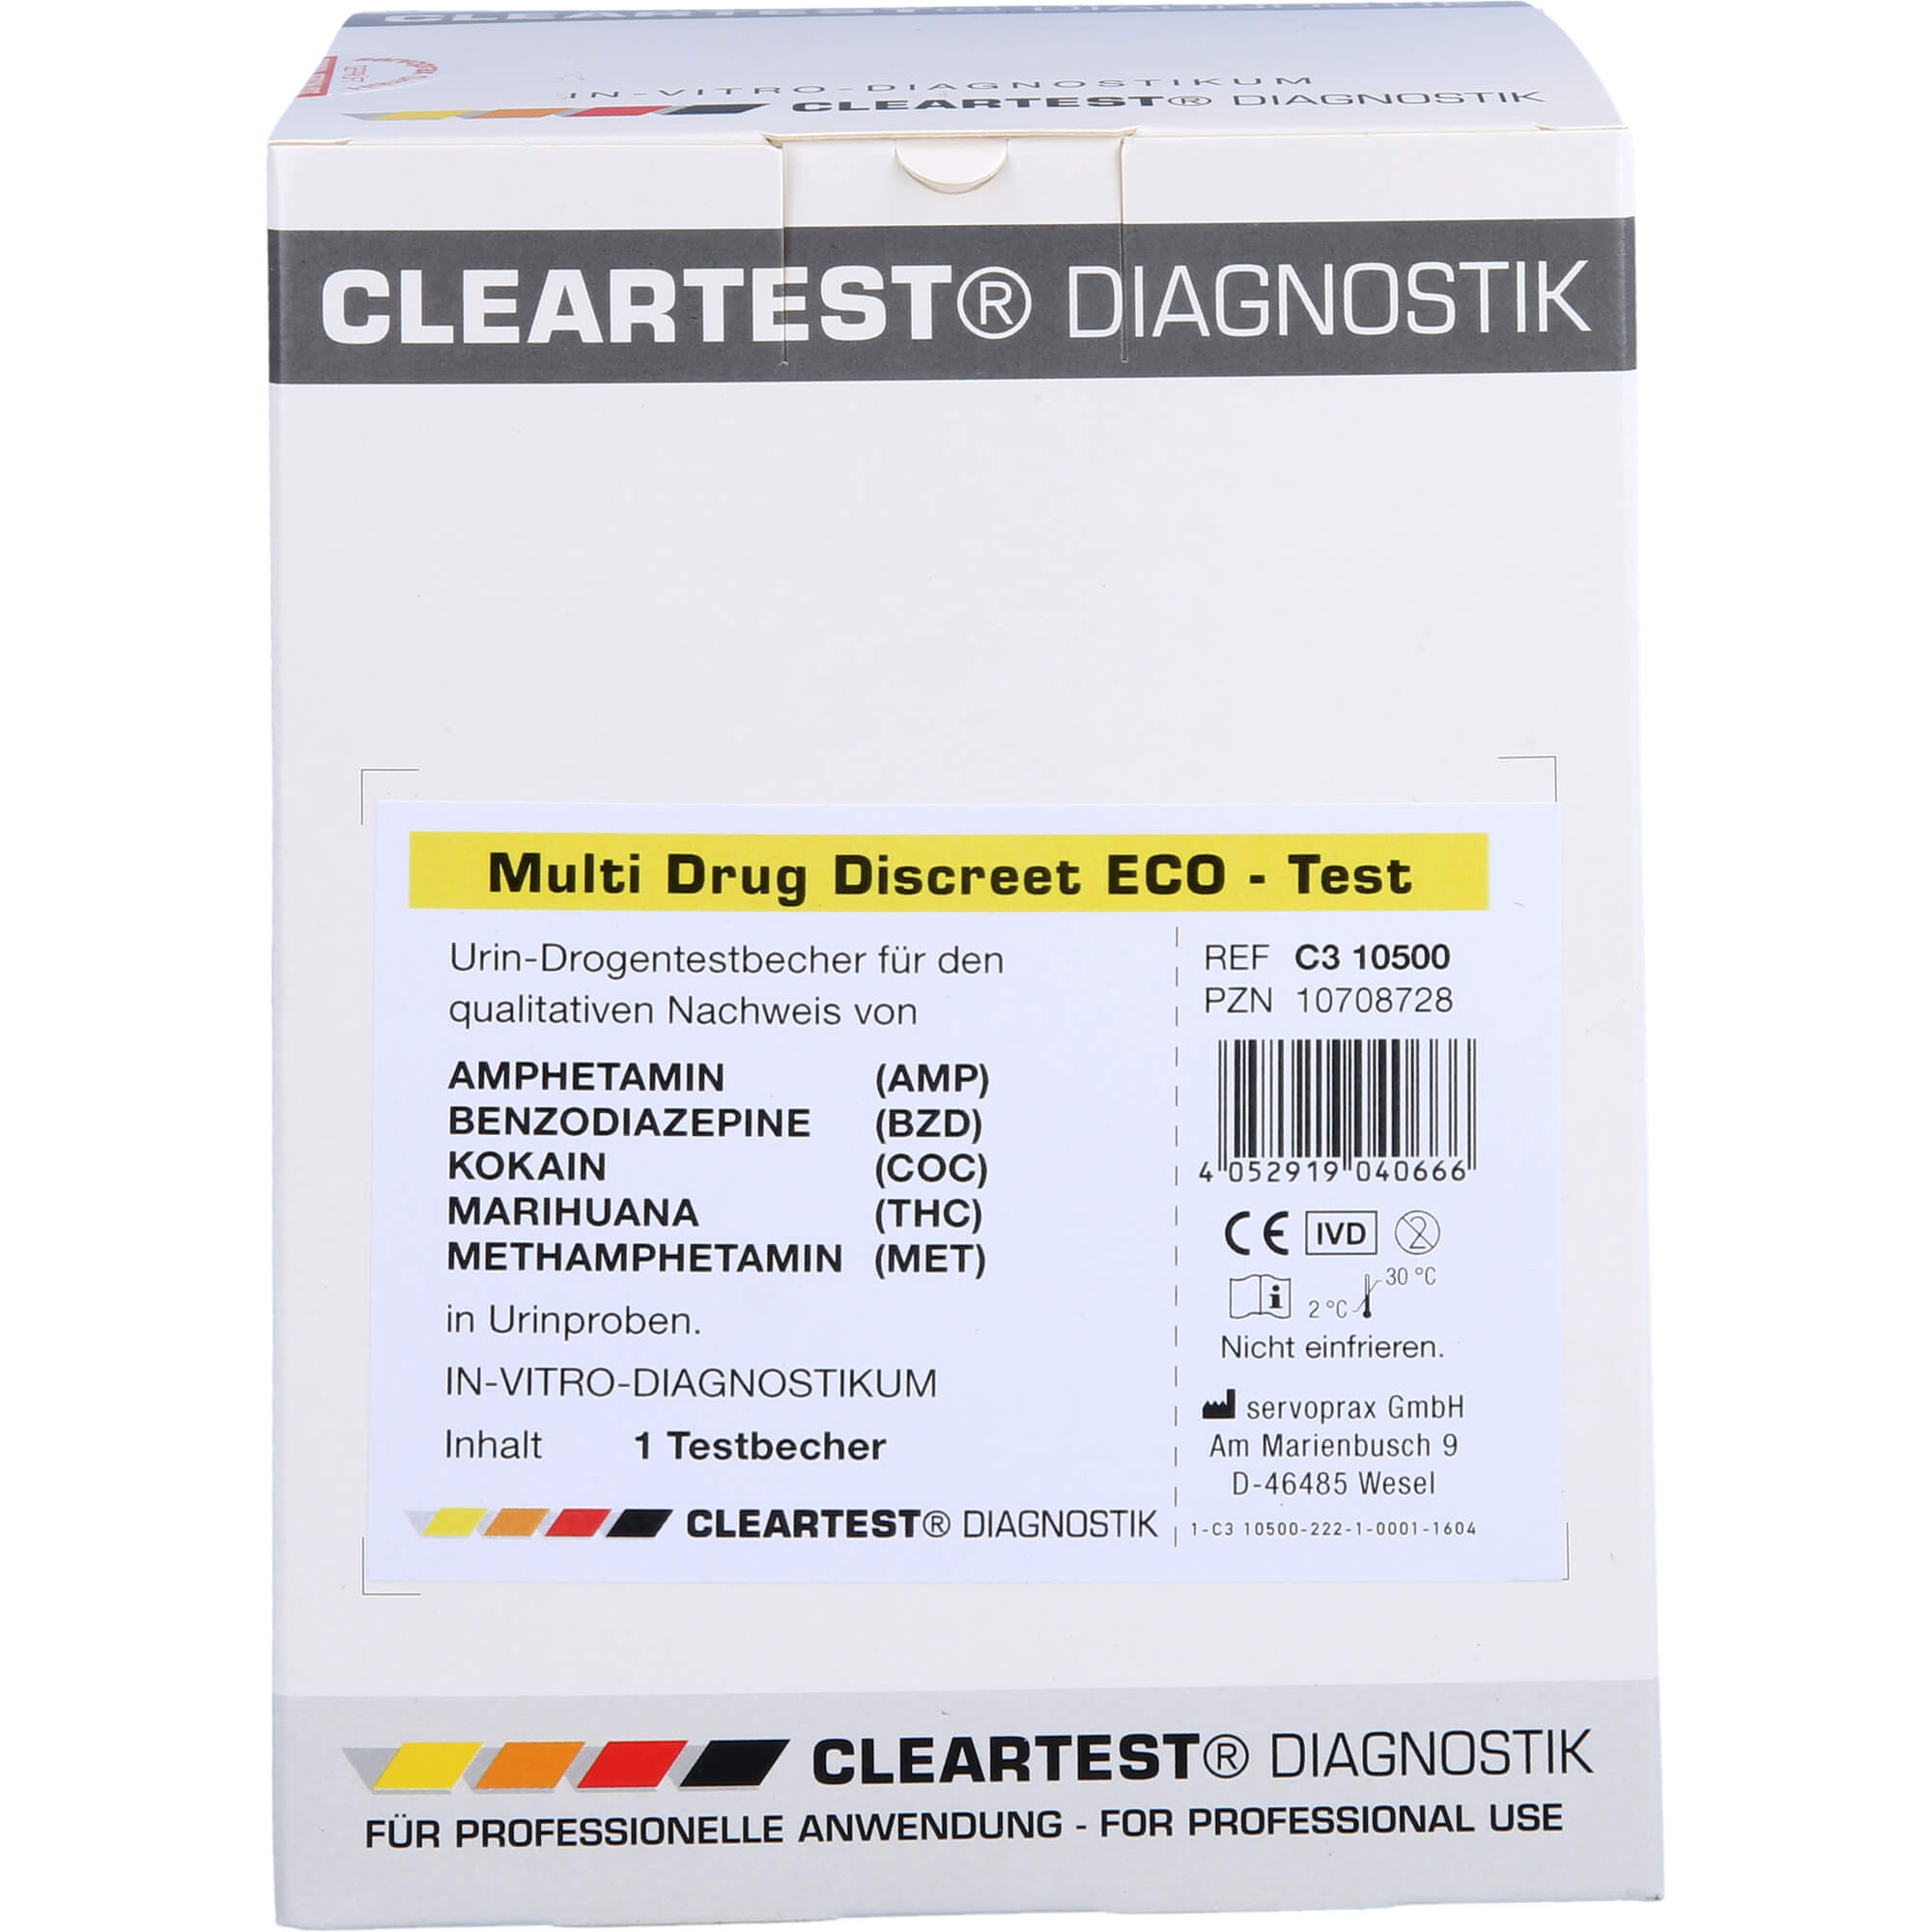 CLEARTEST Multi Drug Discreet Eco-Test 5fach